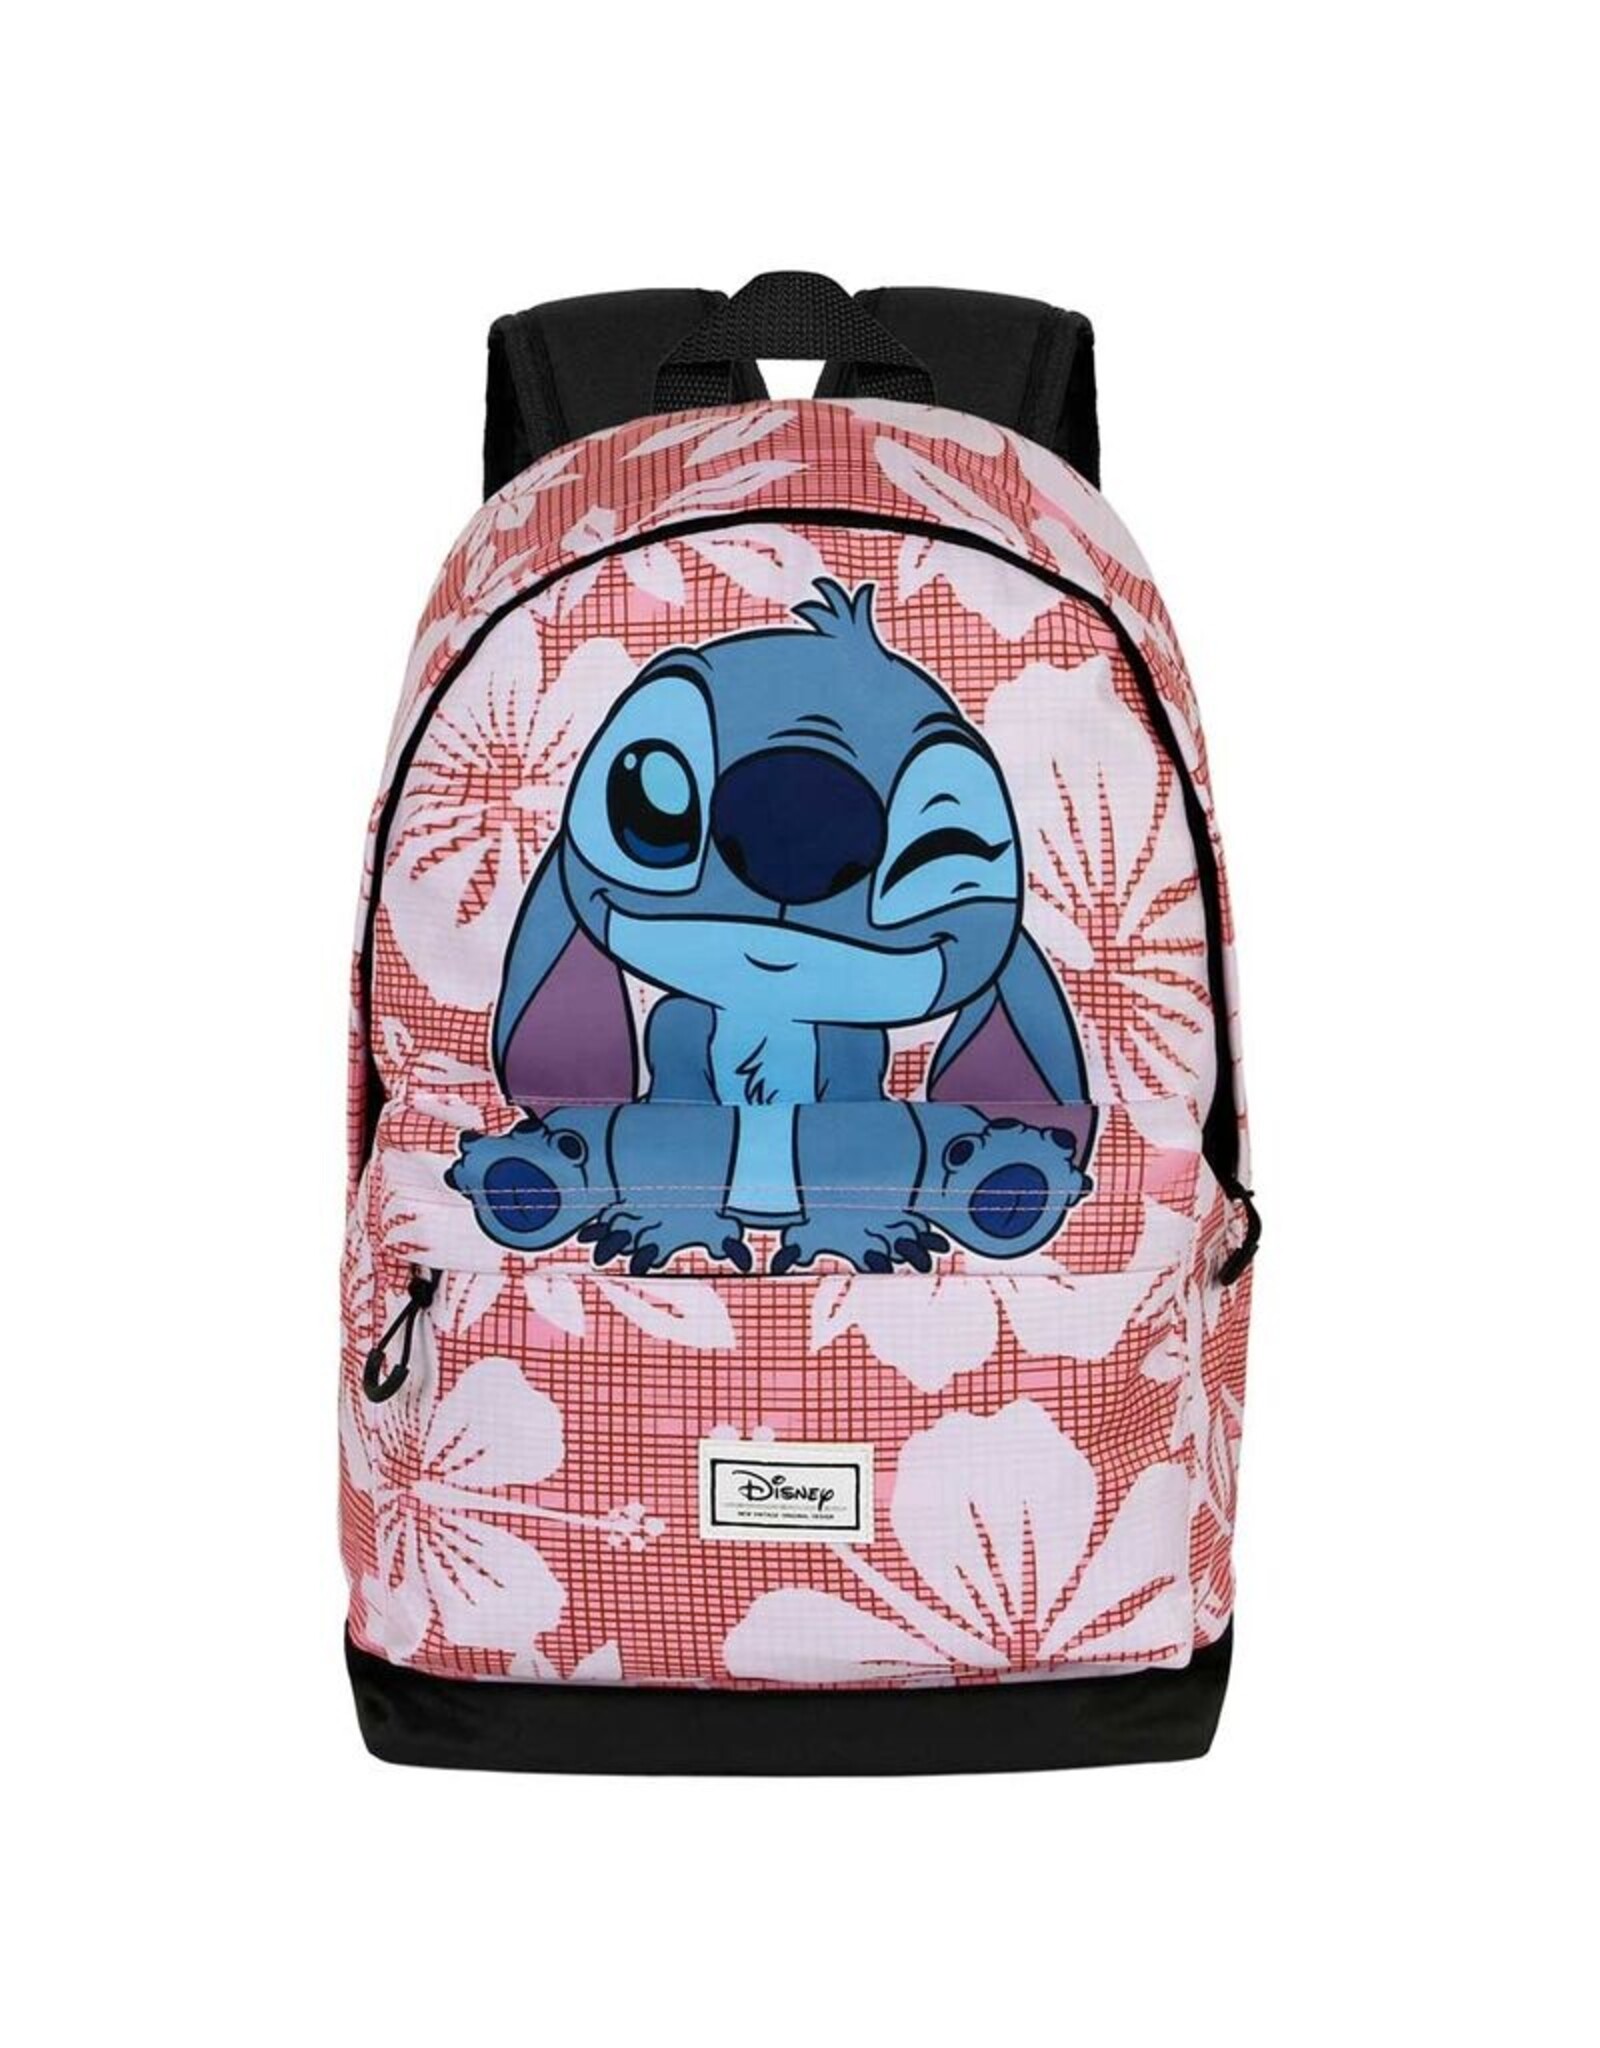 Karactermania Disney bags - Disney Stitch Maui backpack 46cm